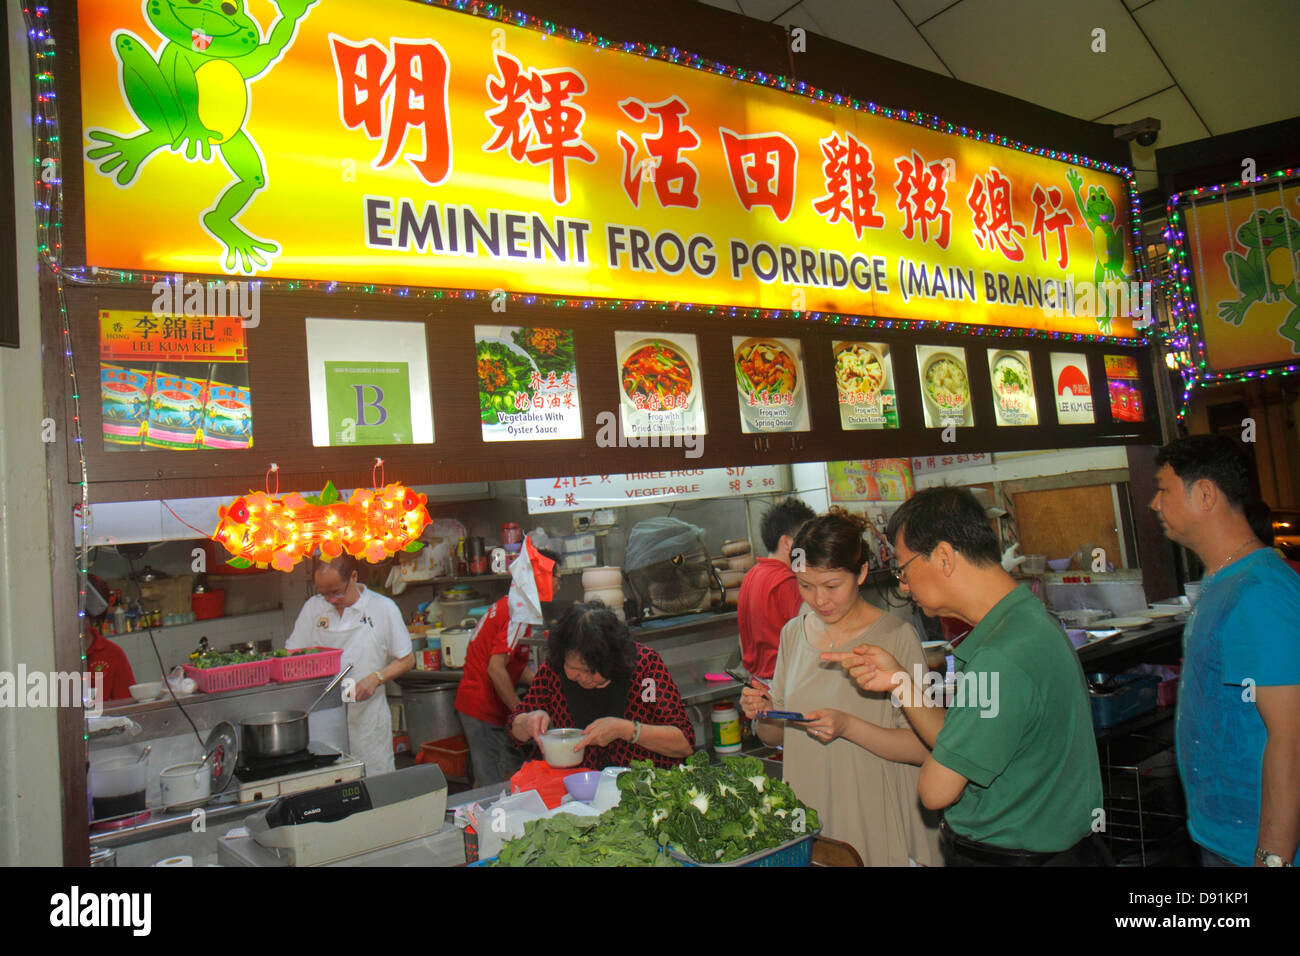 Singapore,Jalan Besar,Lavender Food Centre,Center,court,vendor vendors,stall stalls booth market Asian man men male,ordering,woman female women,taking Stock Photo